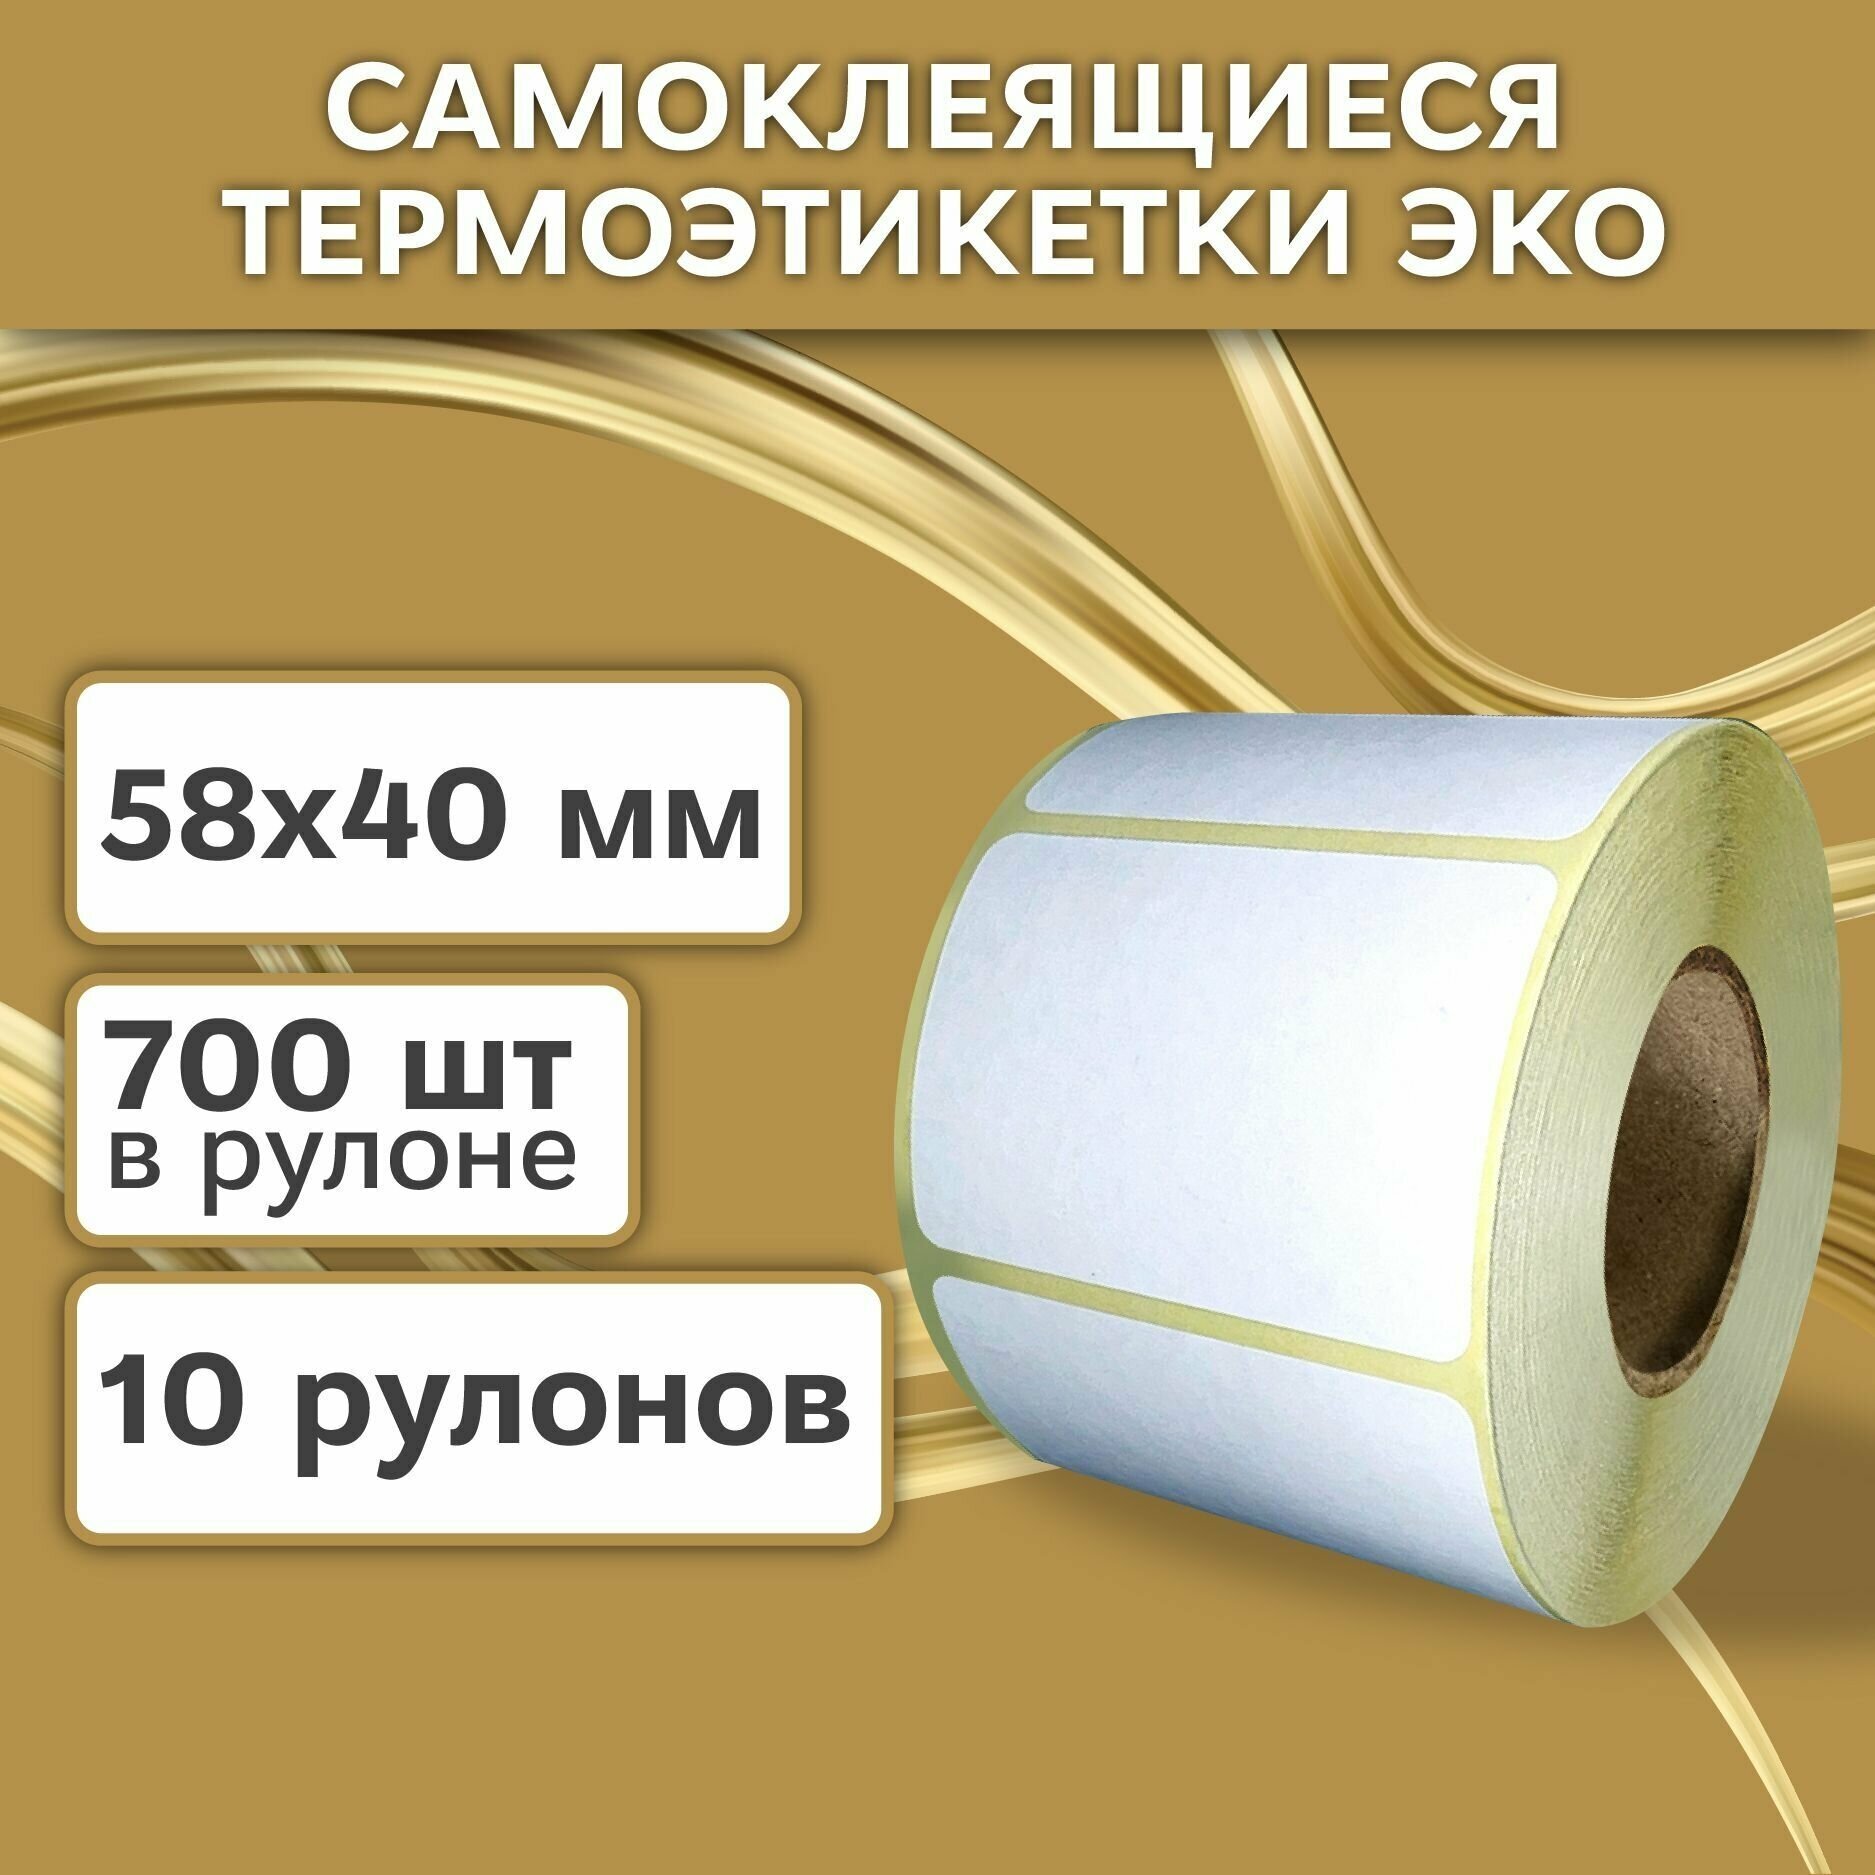 Термоэтикетки 58х40 мм (7000 шт. 700шт/рул), этикетки самокляещиеся в рулоне, 40 мм полноразмерная втулка. В наборе 10 шт.